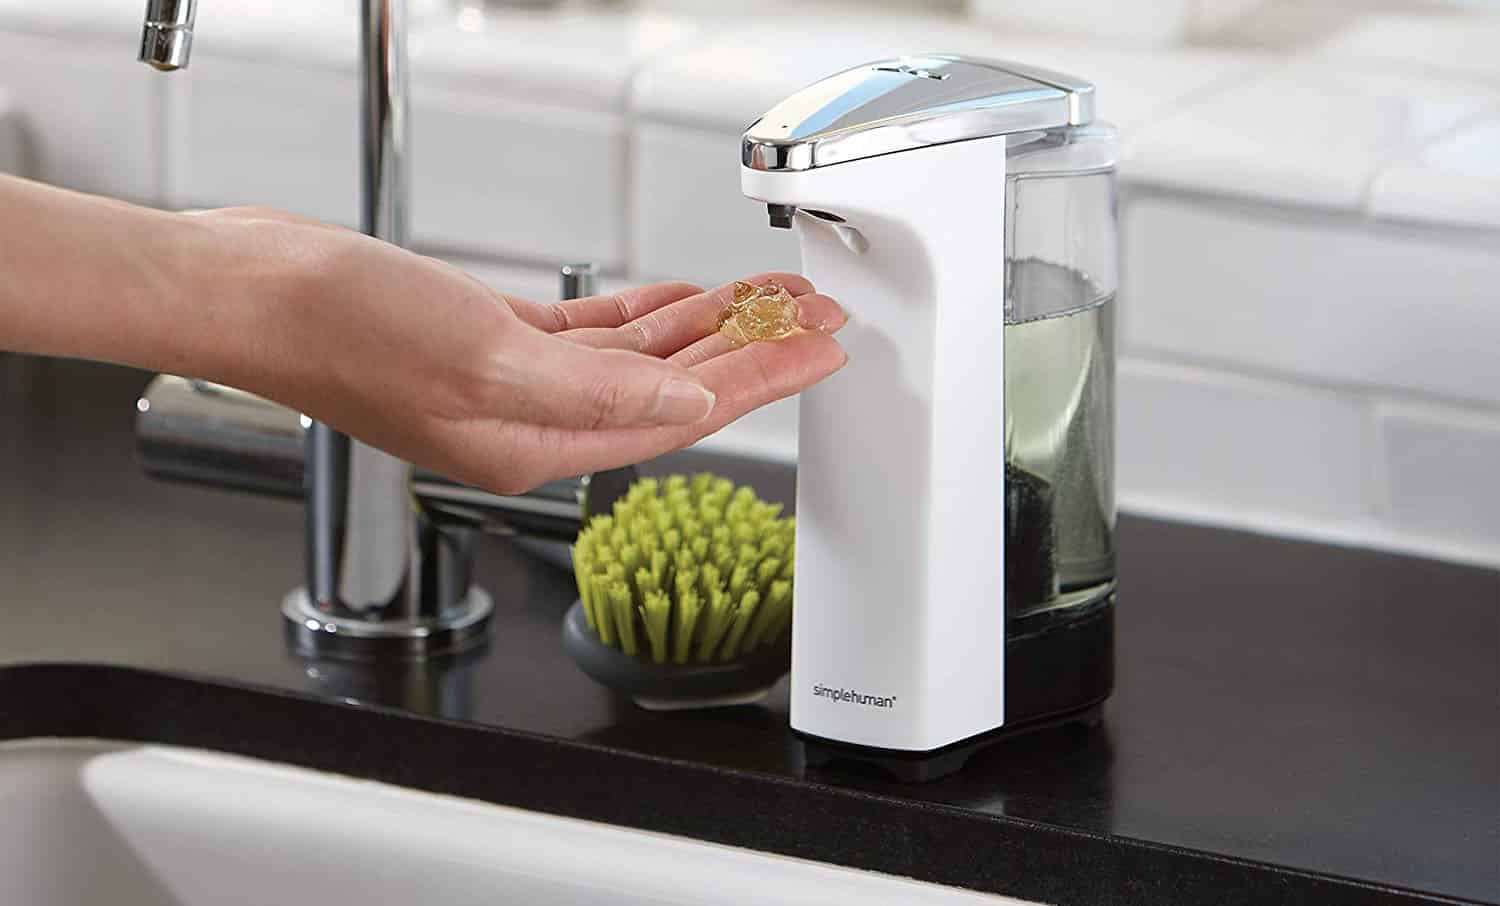 Automatic soap dispensers